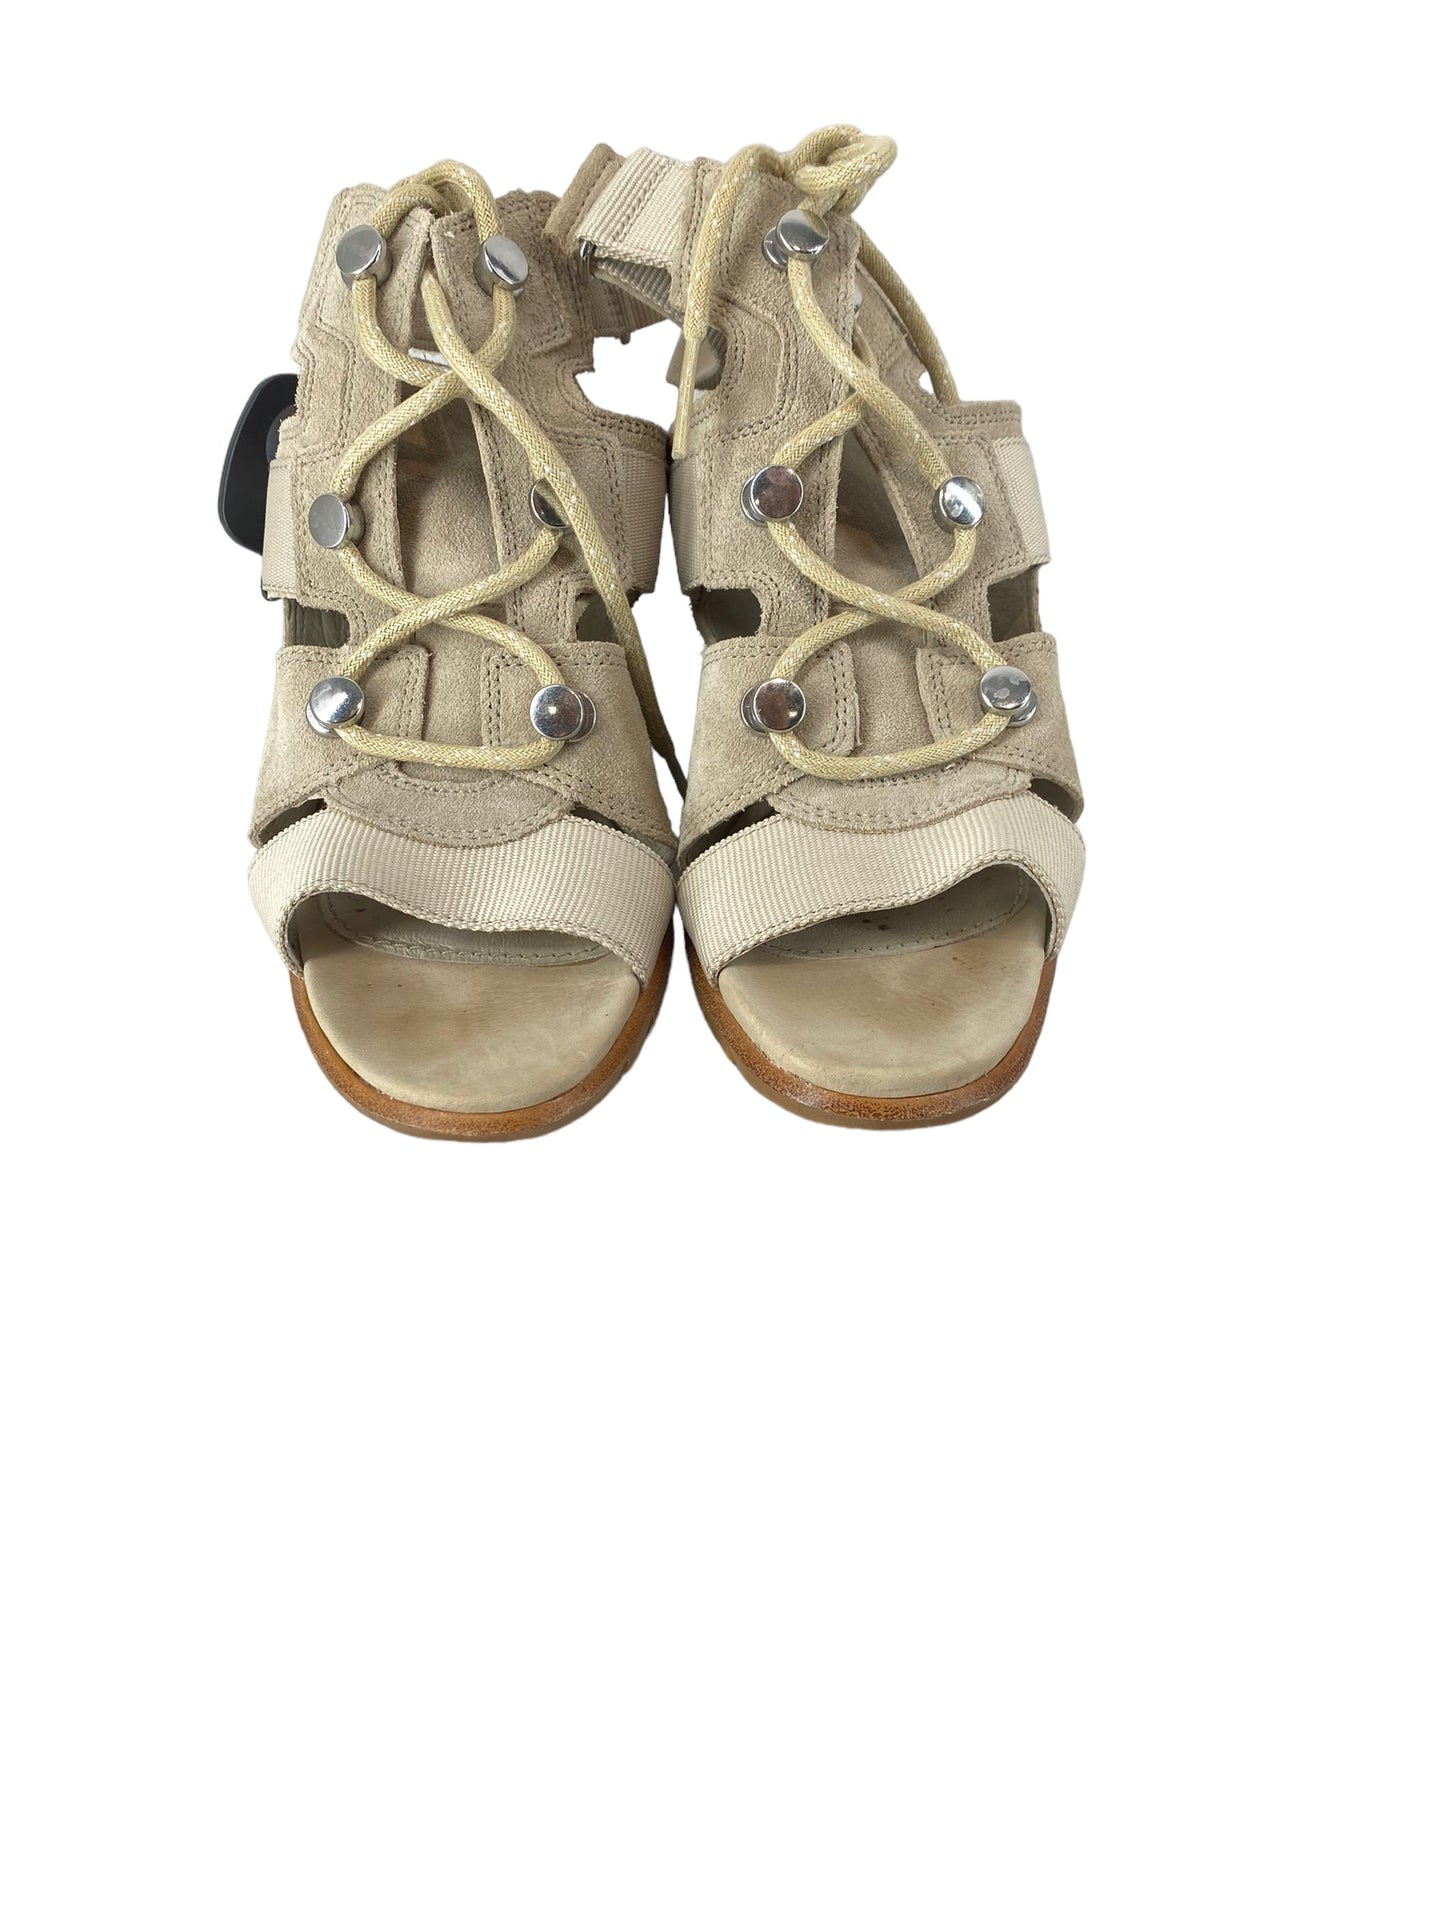 Shoes Heels Block By Sorel  Size: 7.5